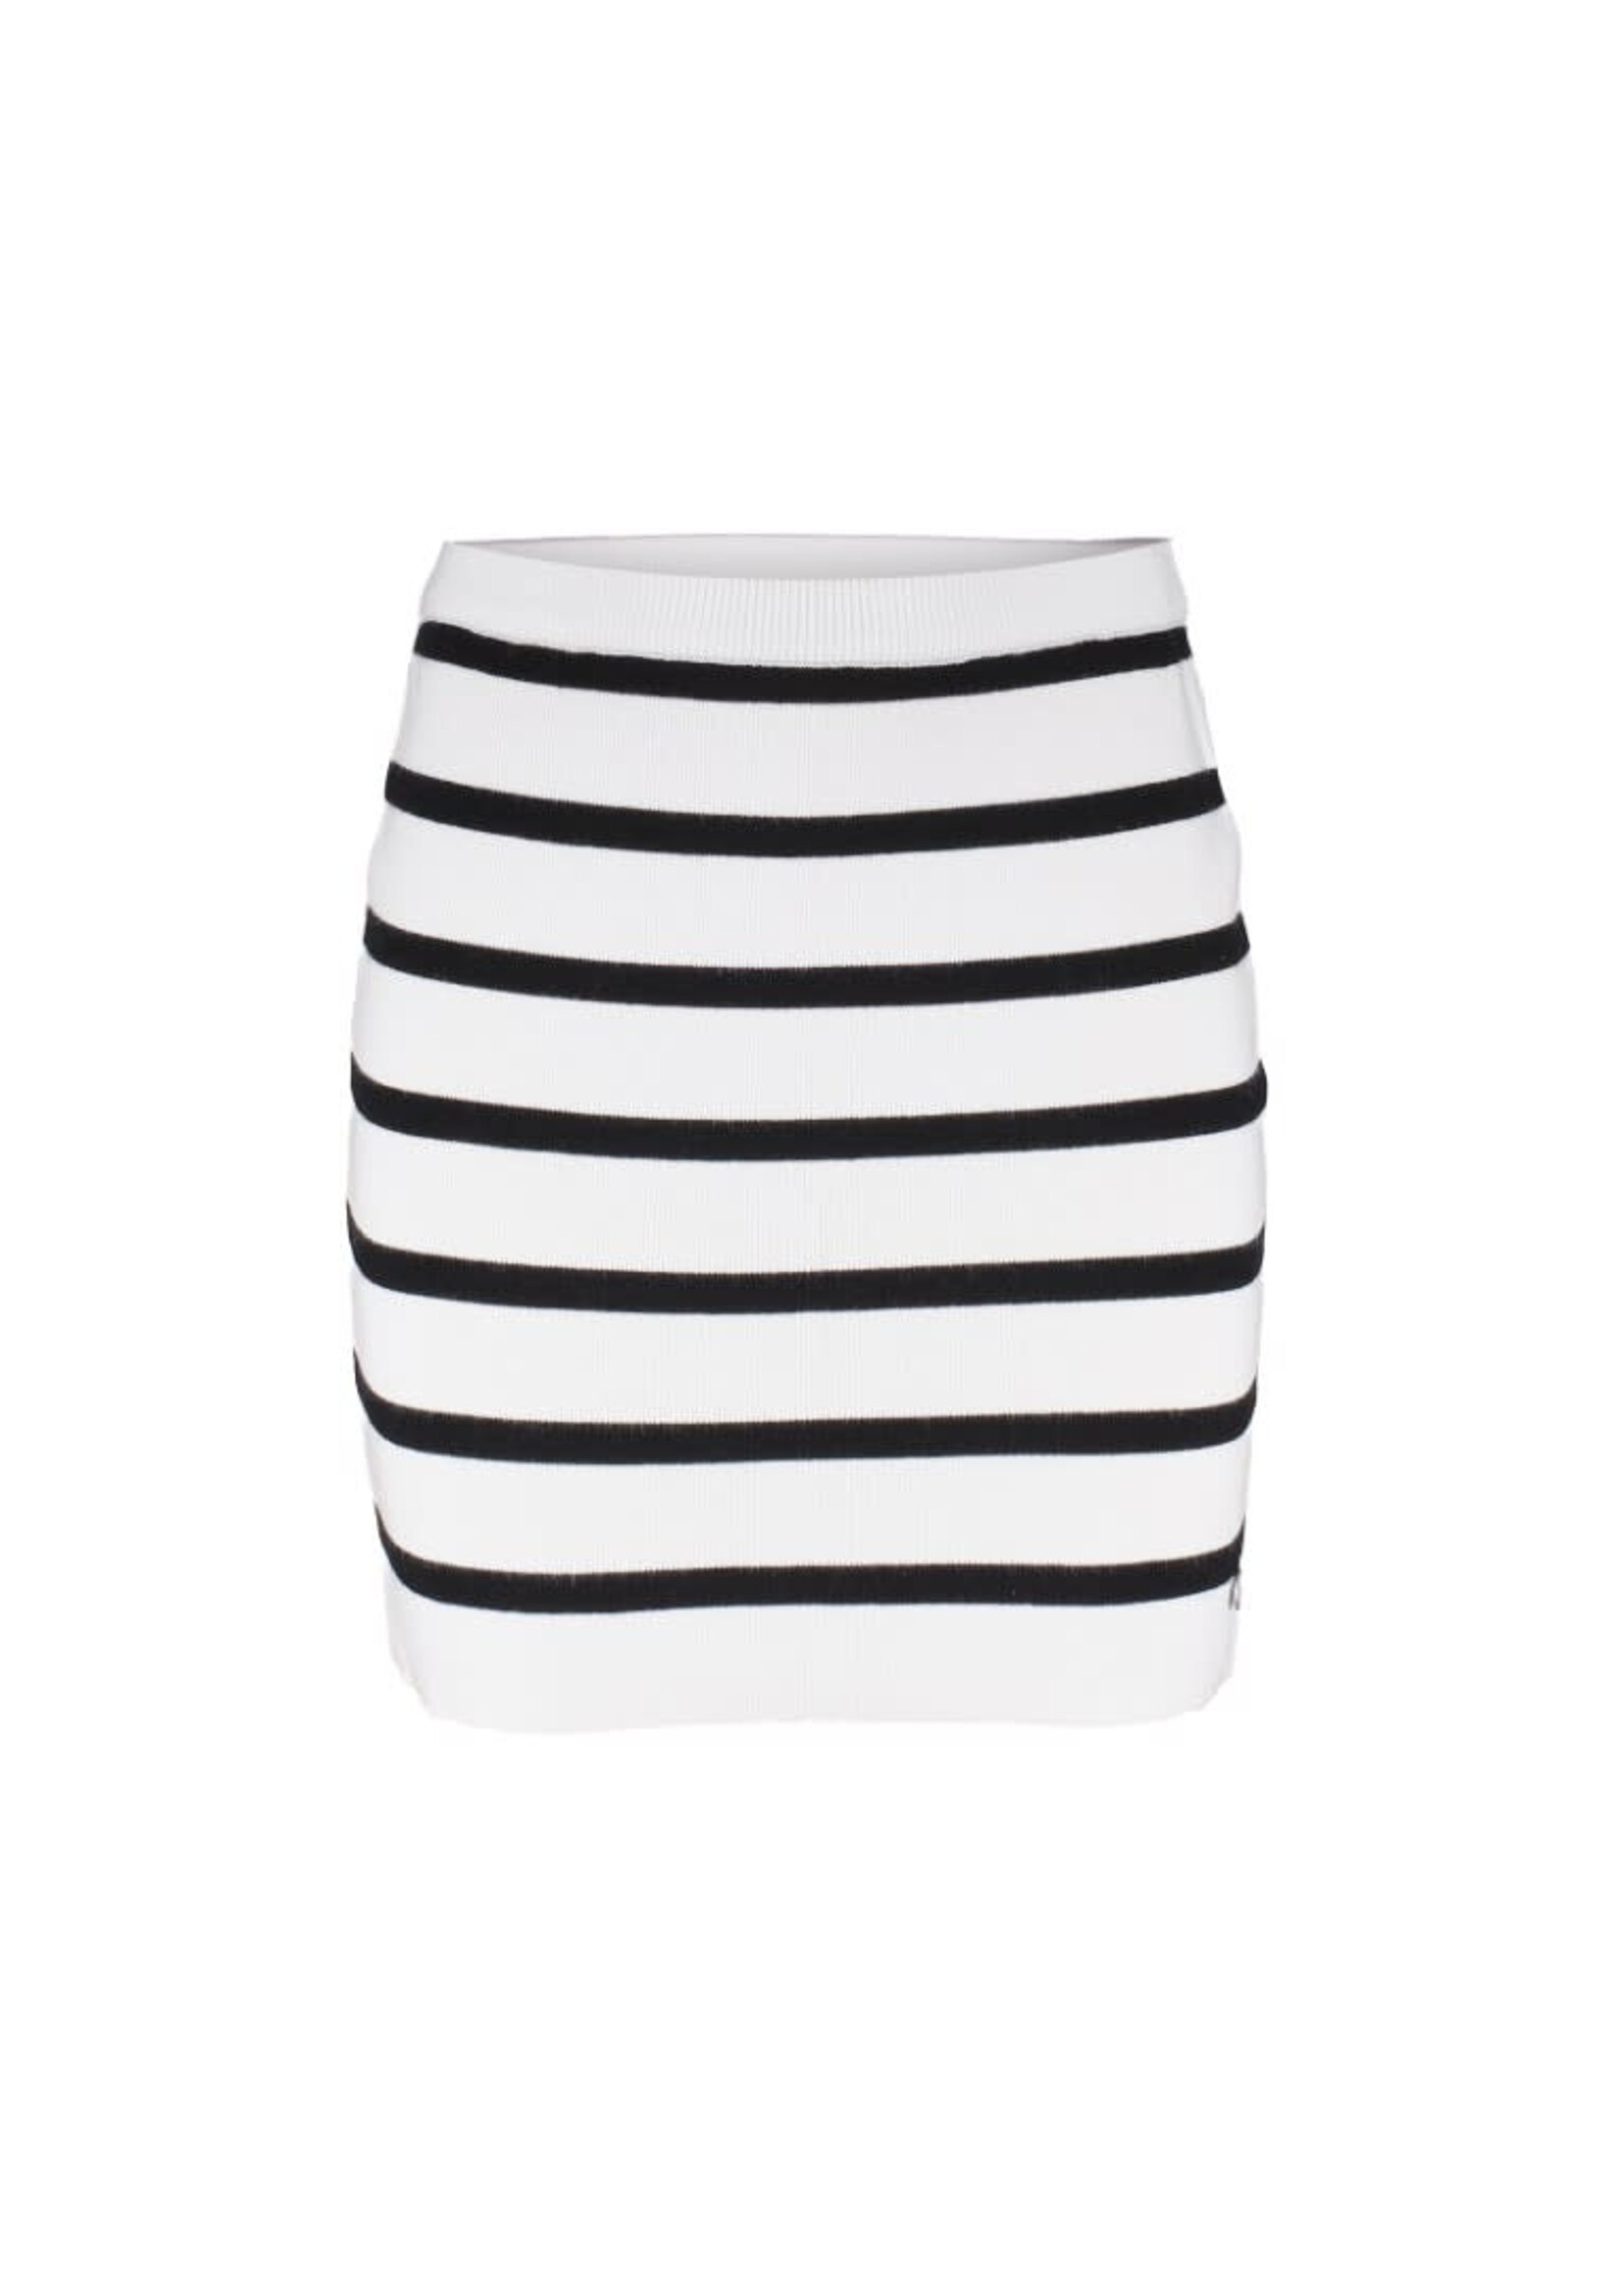 Frankie&Liberty Frankie&Liberty Maud Knit Skirt Chalk White/ Black stripe-FL24222